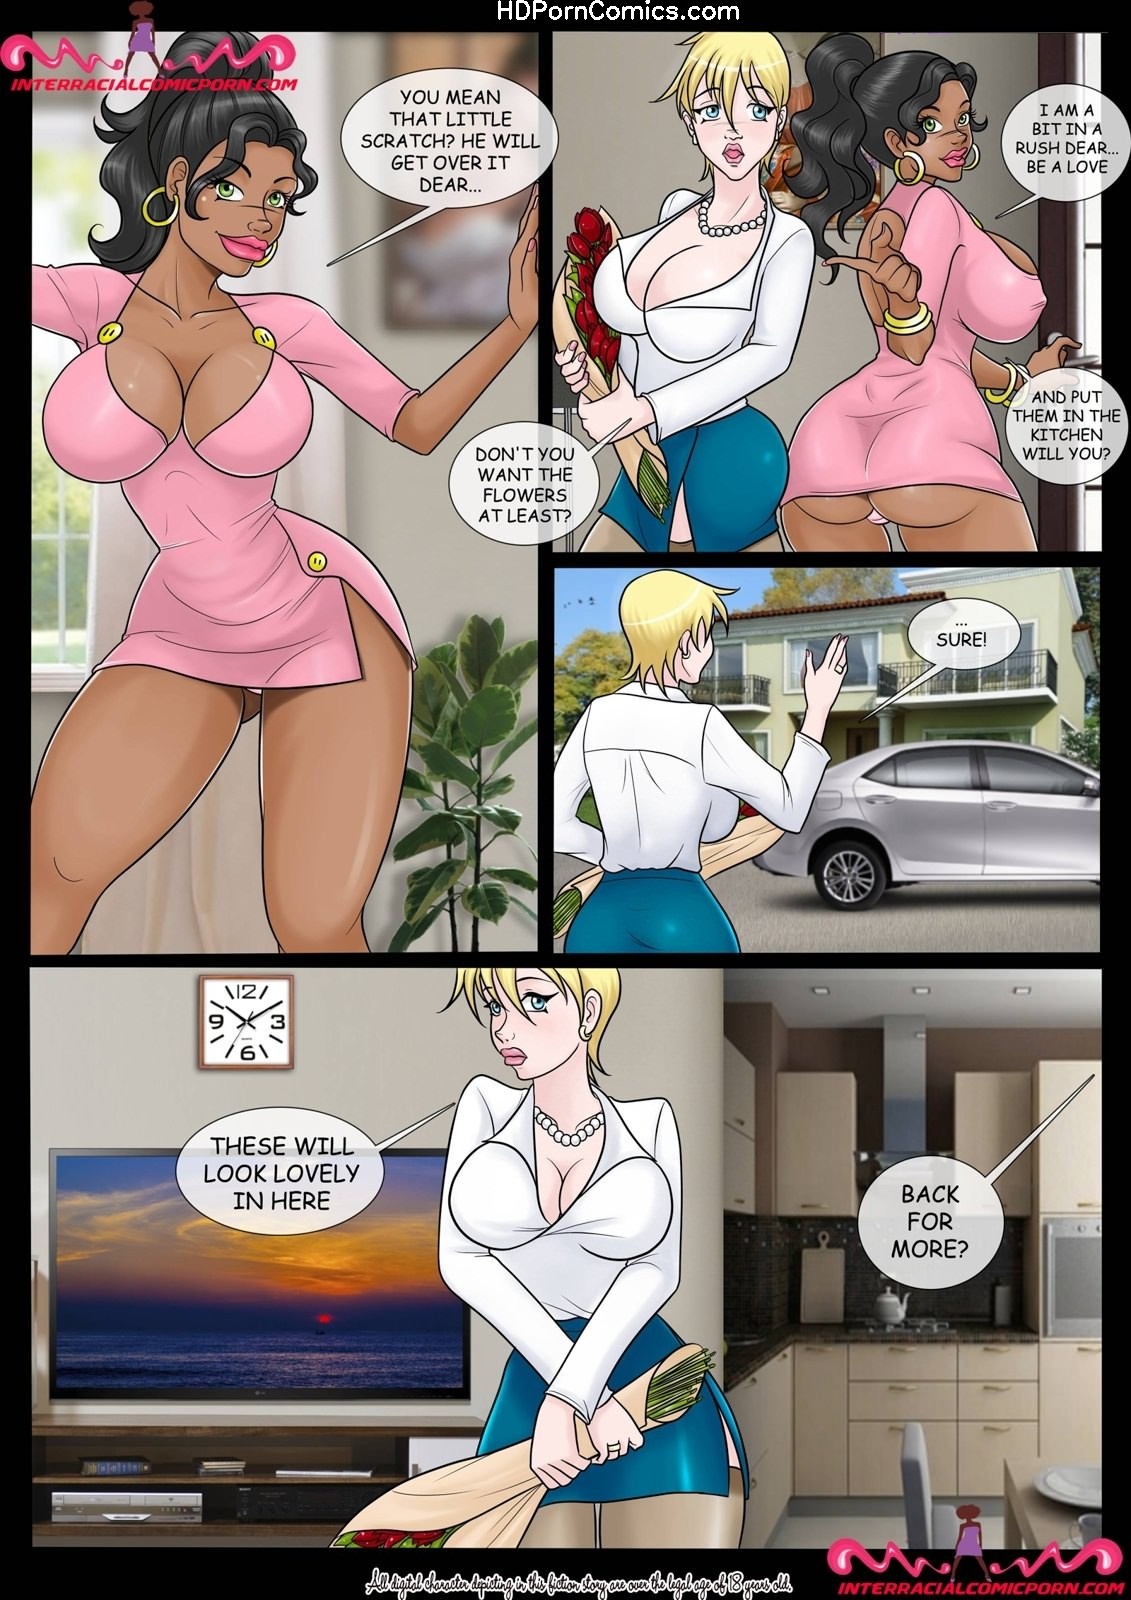 The New Neighbor - Issue 2 Cartoon Porn Comic - HD Porn Comix